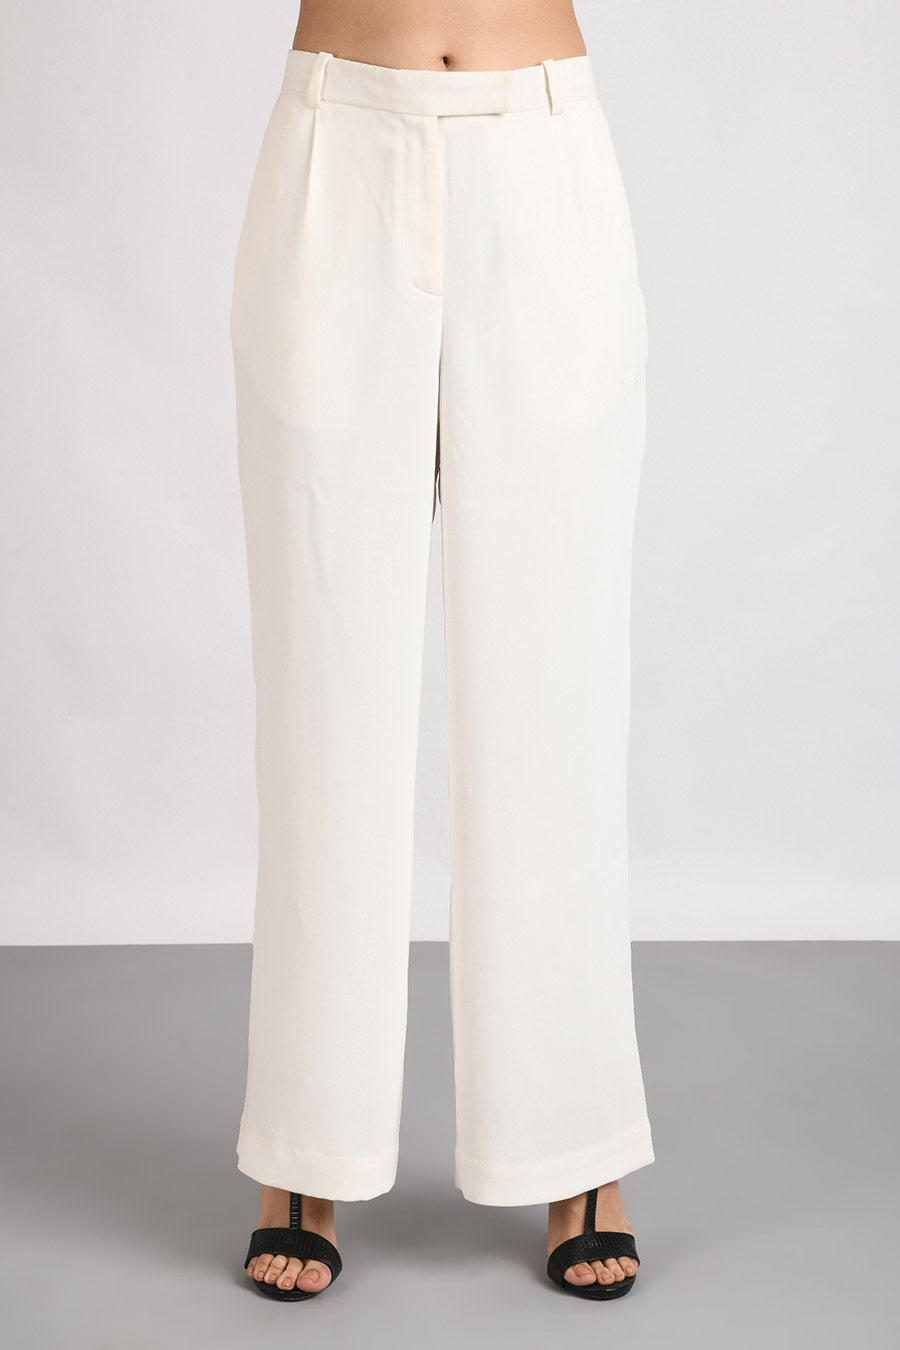 White Classic Pants